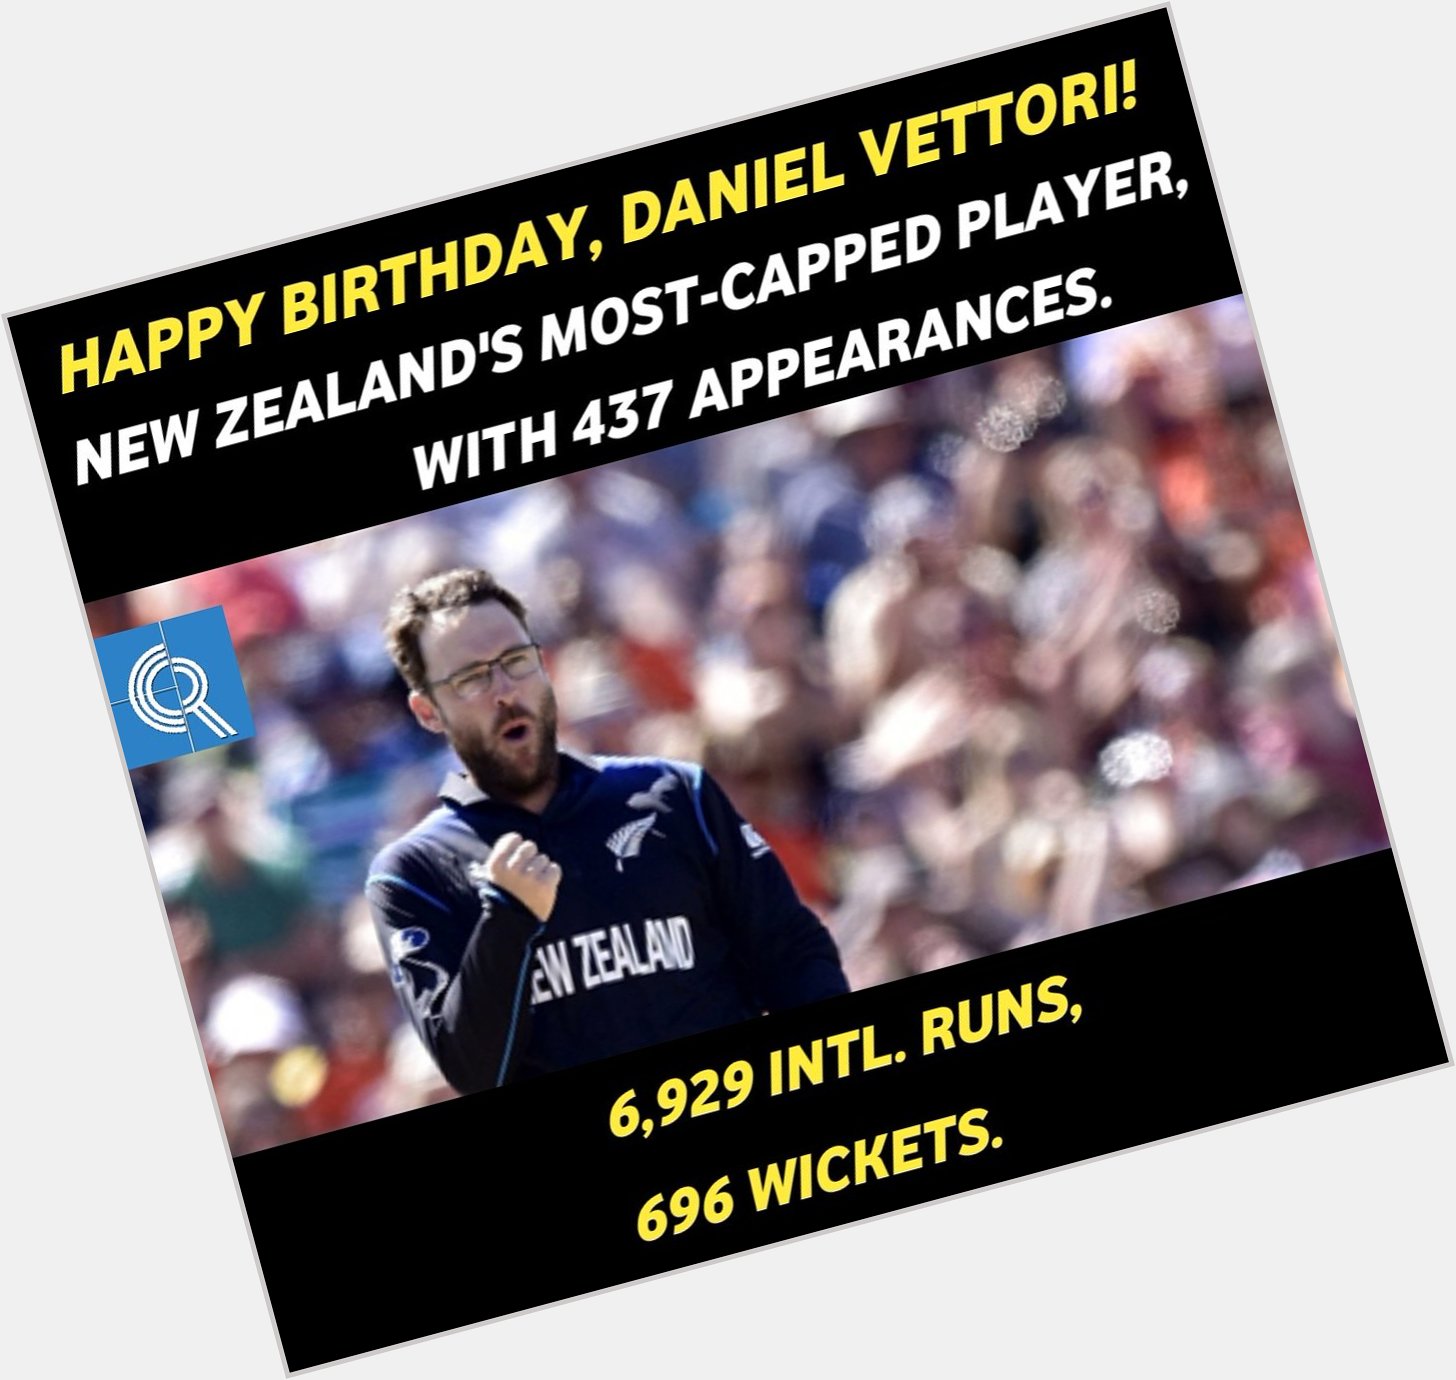 Happy Birthday, Daniel Vettori! 
.
.     